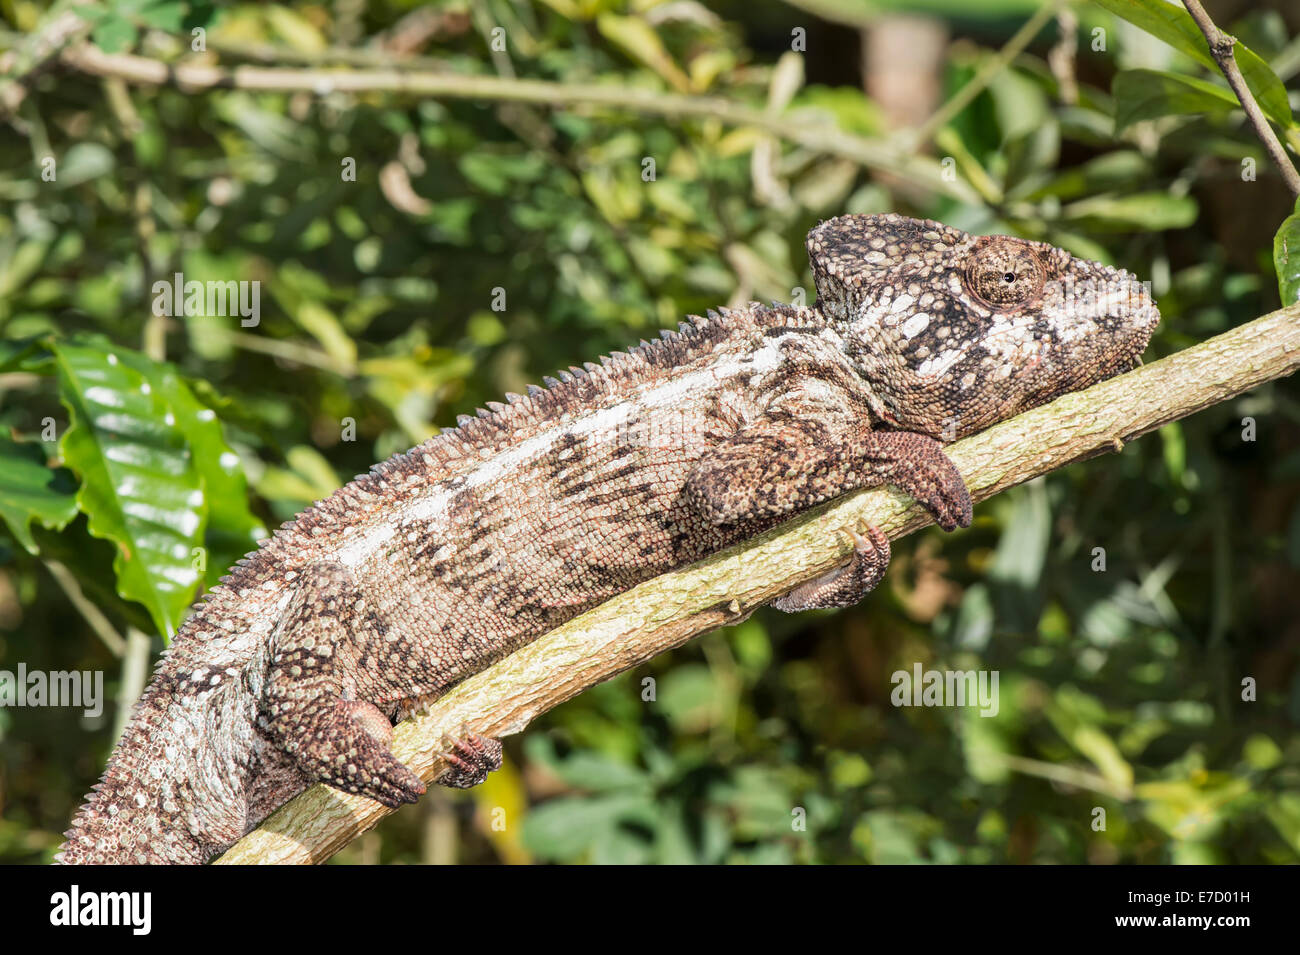 Oustalet o Camaleón gigante de Madagascar (Furcifer oustaleti), Madagascar Foto de stock